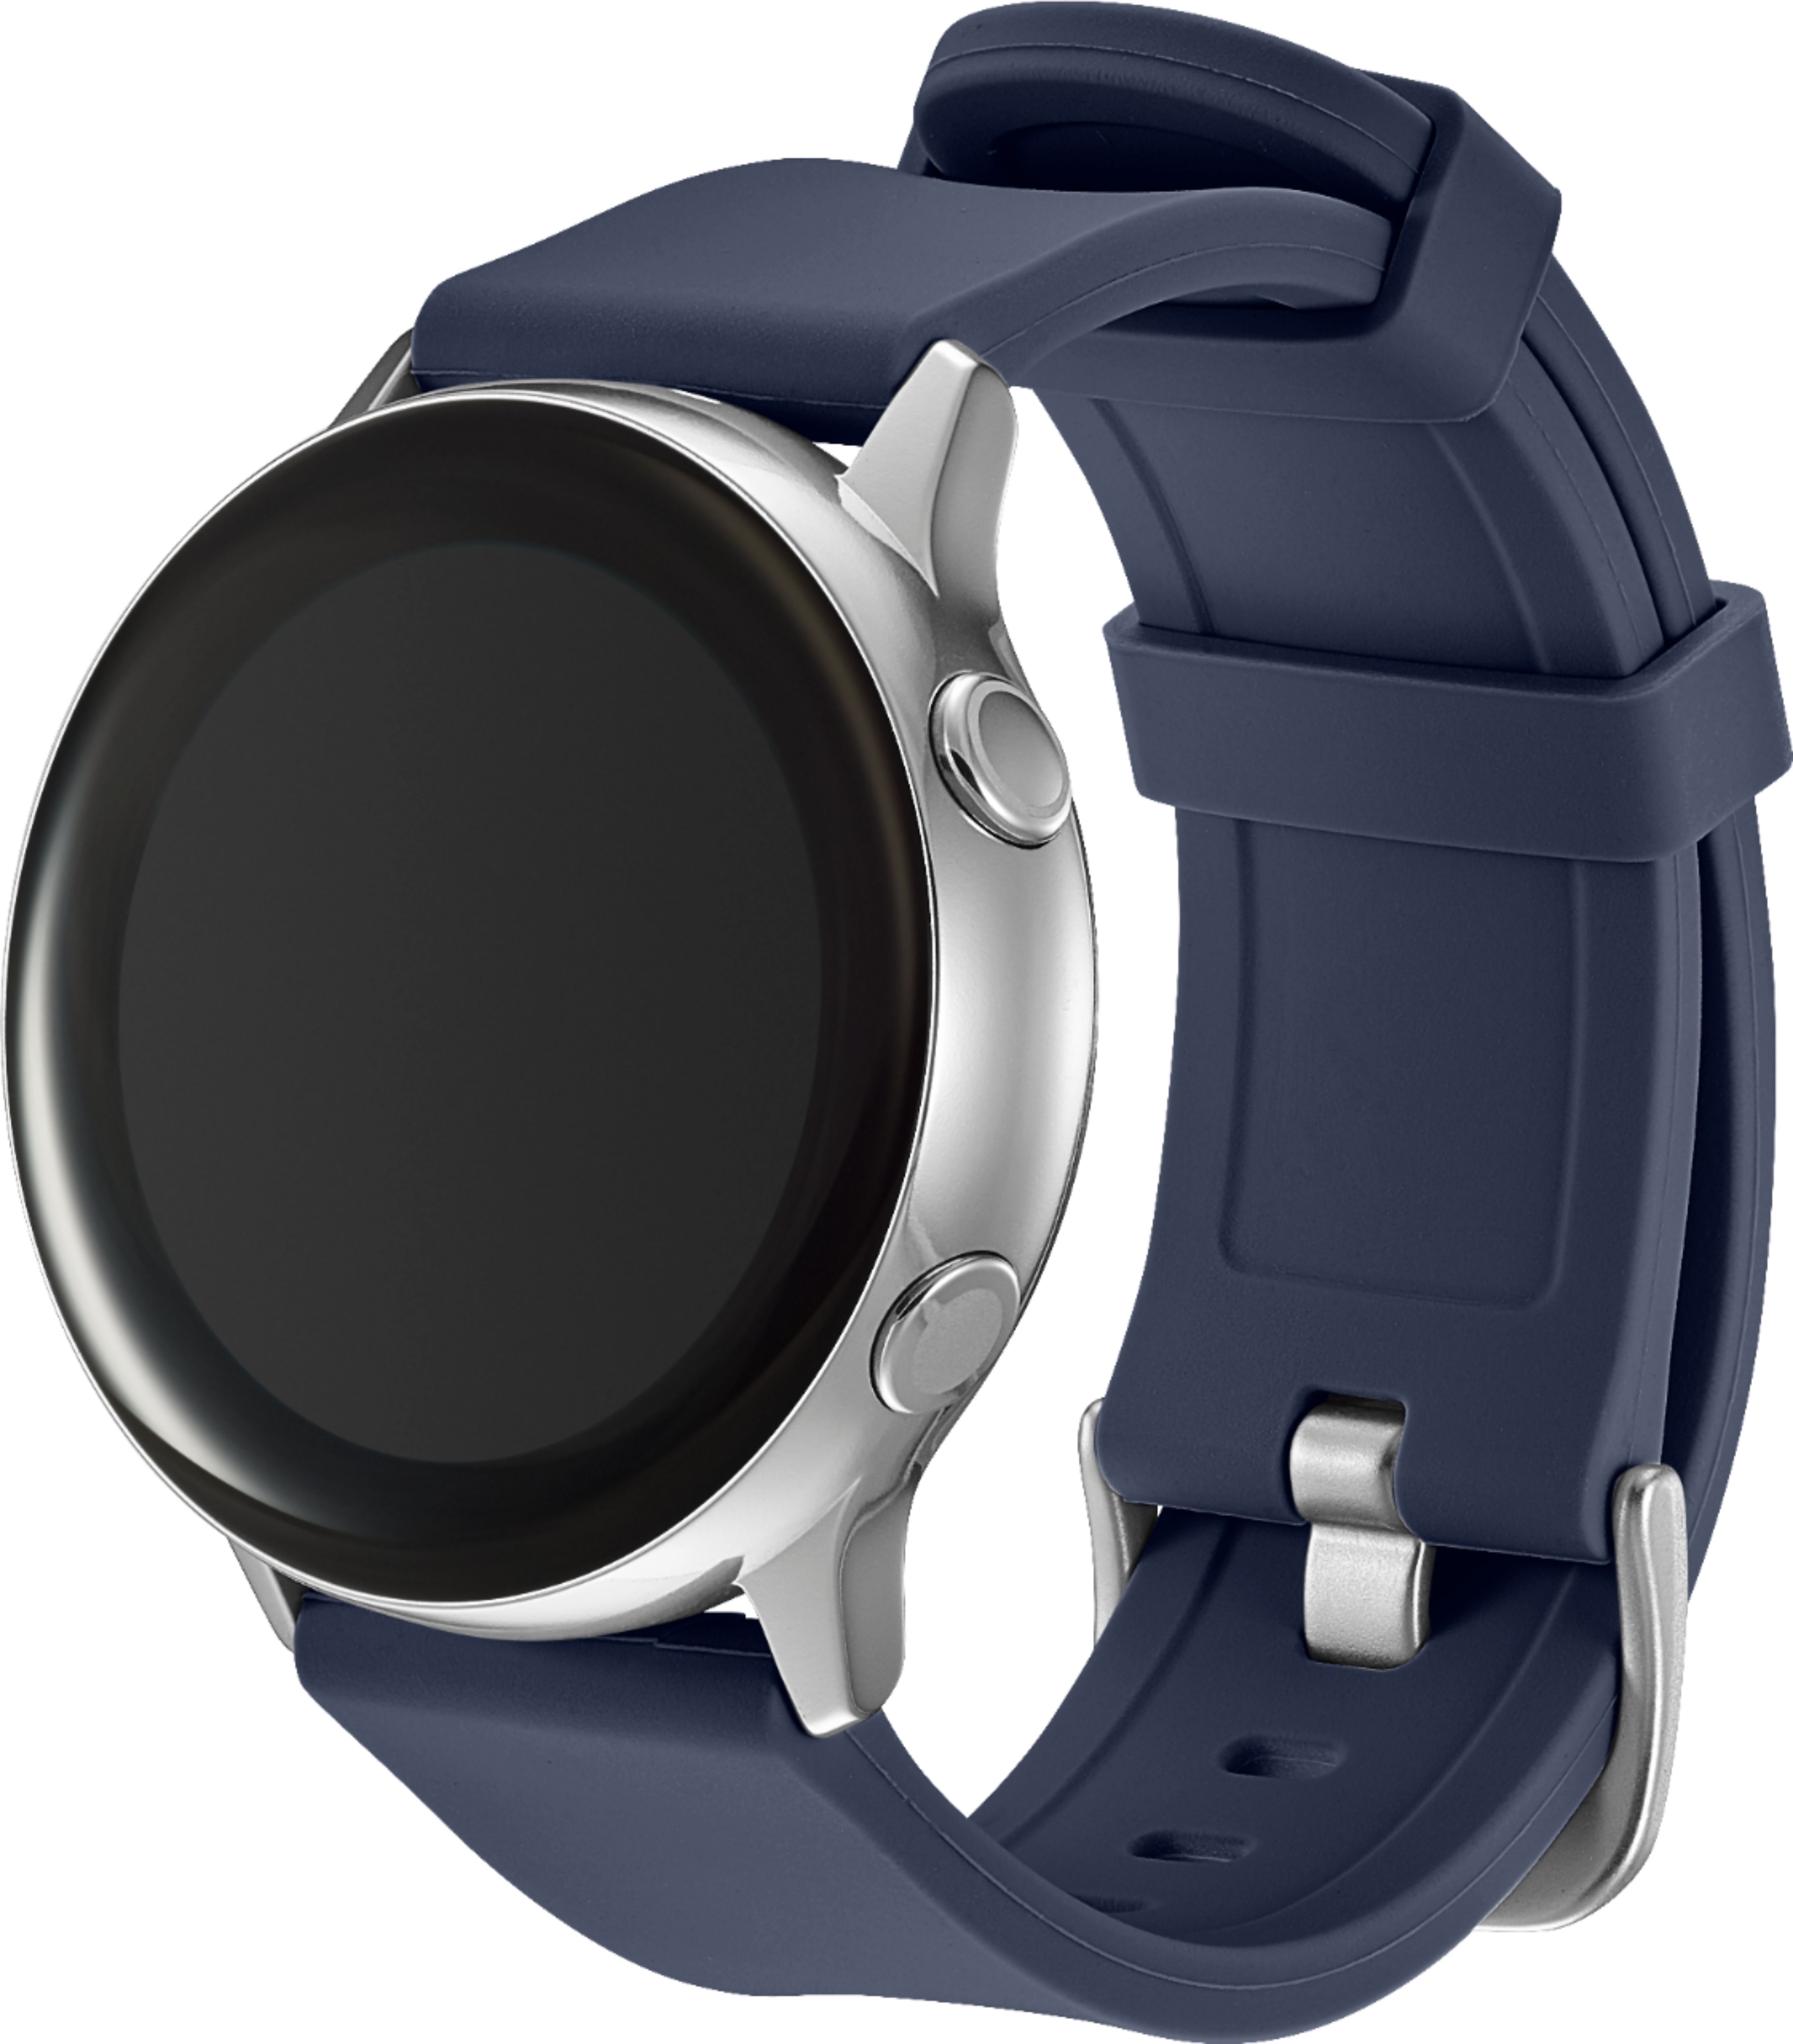 Left View: Samsung - Smart watch wireless charger for Galaxy Watch5 Pro, Galaxy Watch5 S/L and Galaxy Watch4 - Black